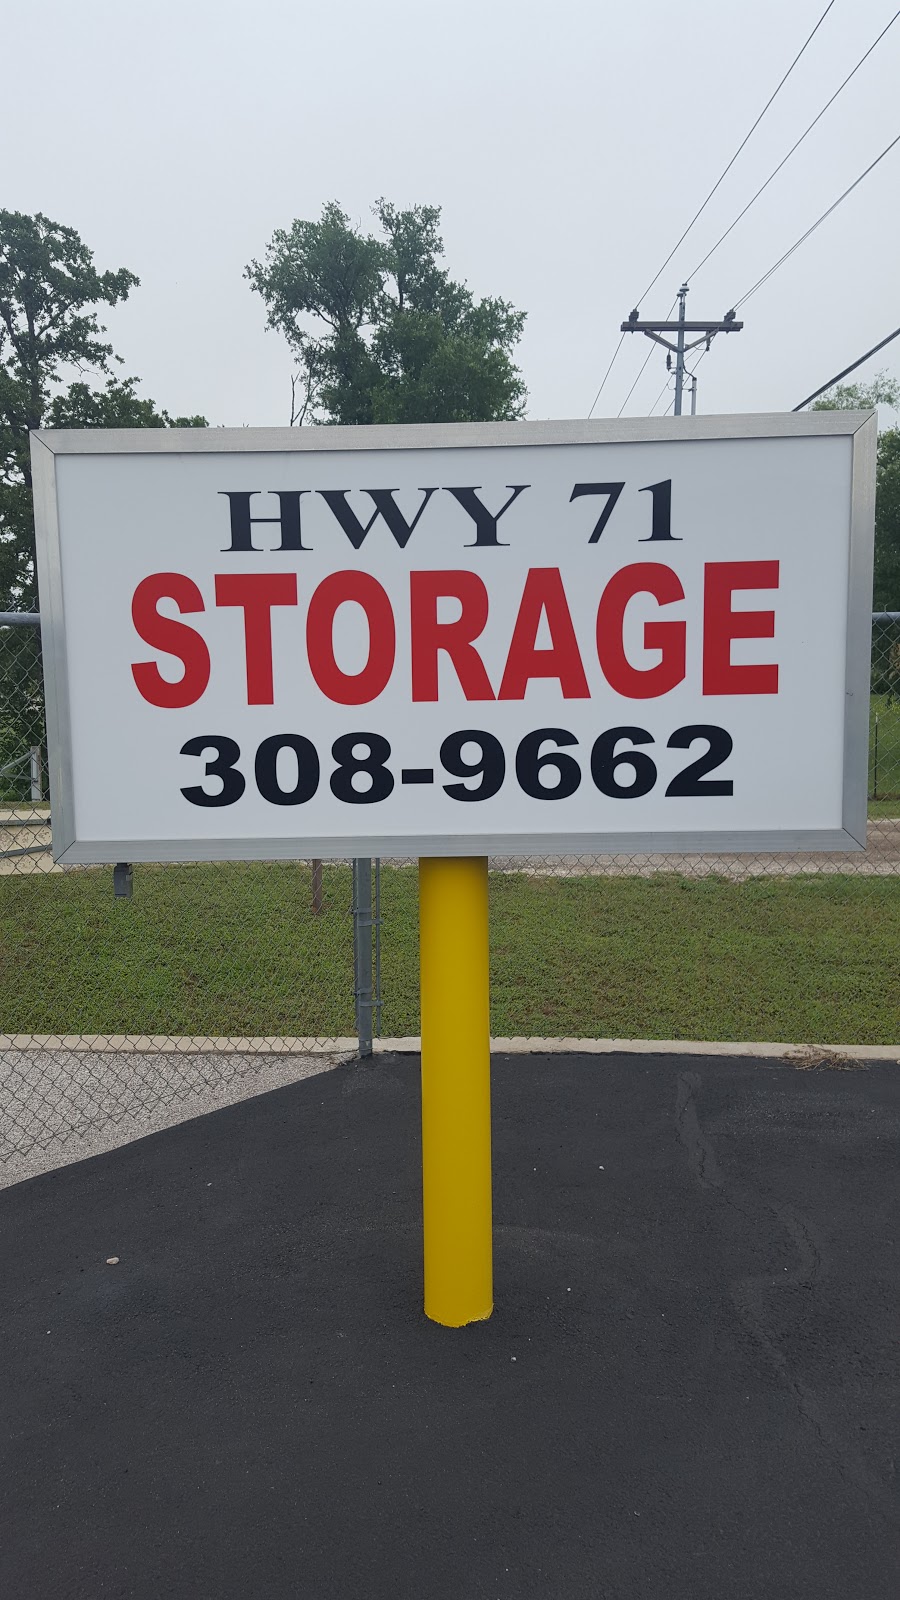 Highway 71 Storage - storage  | Photo 3 of 10 | Address: 901 Union Chapel Rd, Cedar Creek, TX 78612, USA | Phone: (512) 308-9662